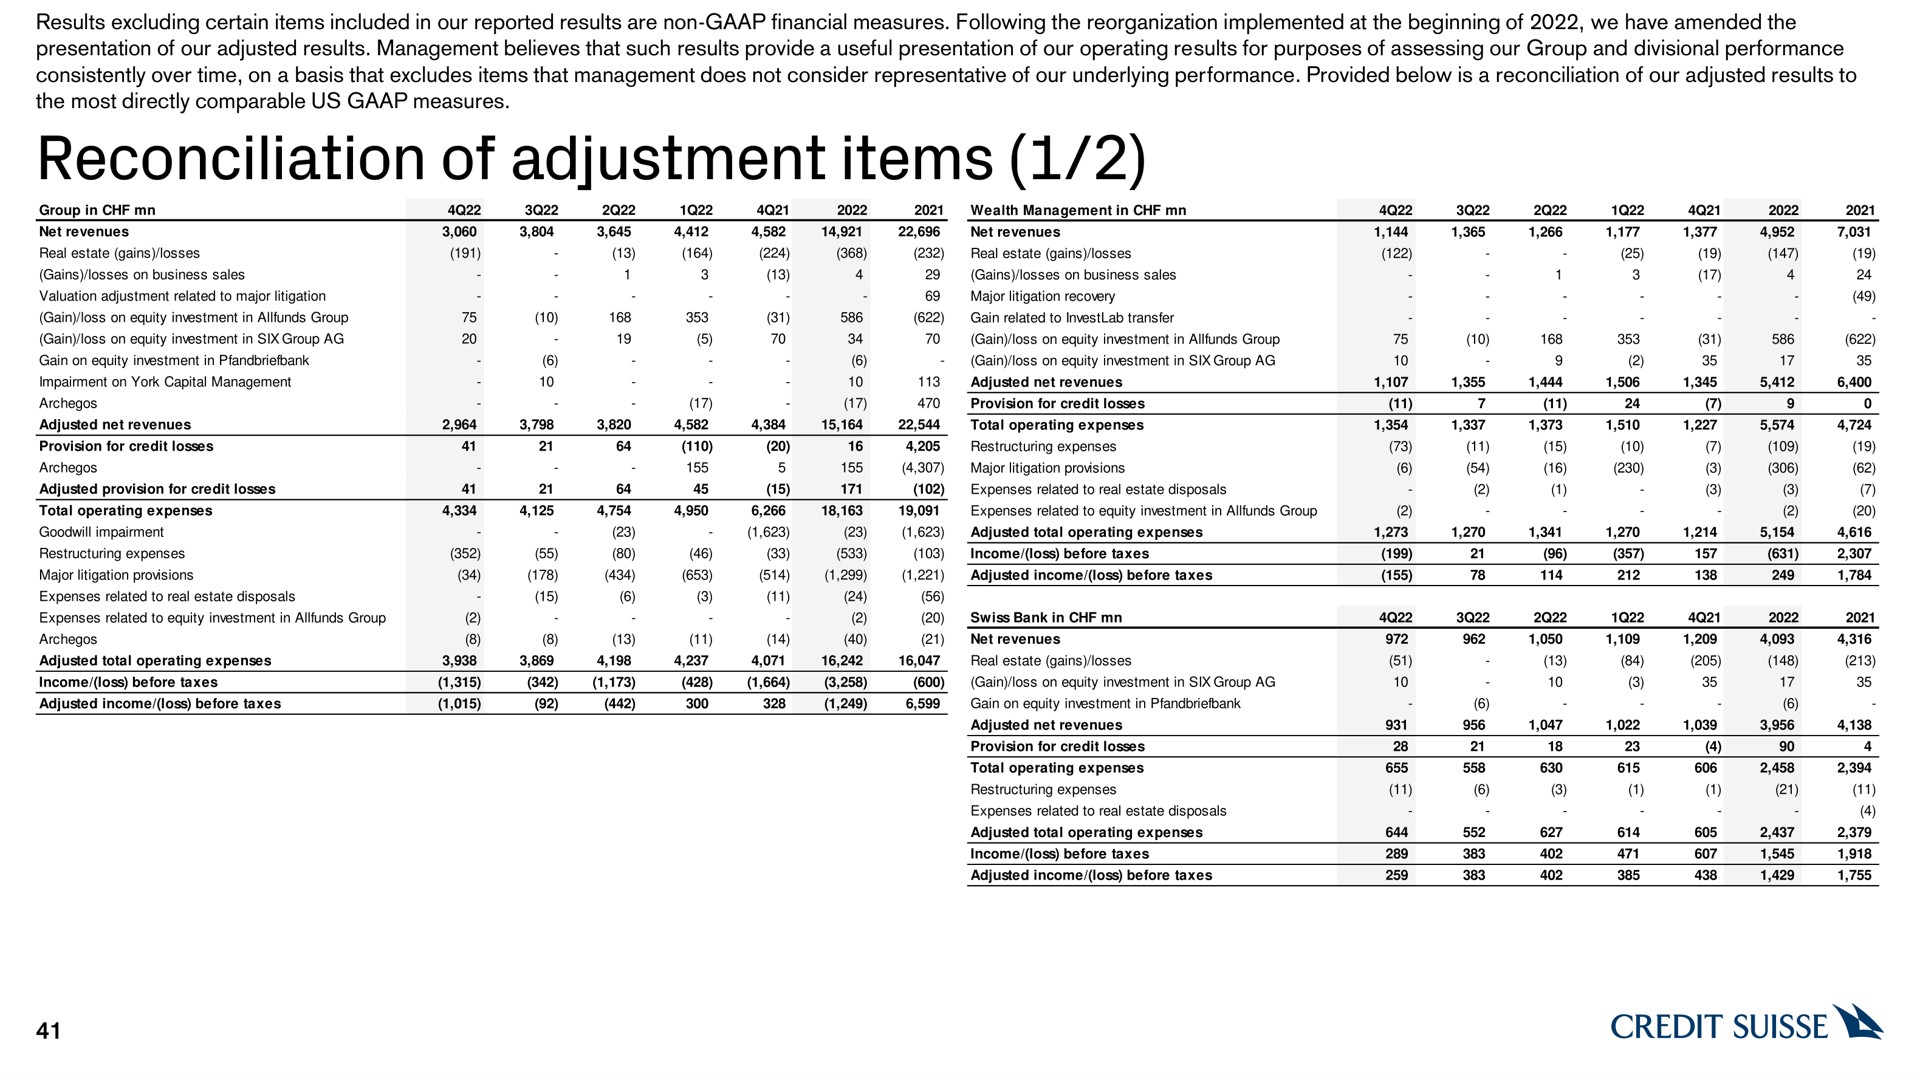 reconciliation of adjustment items | Credit Suisse